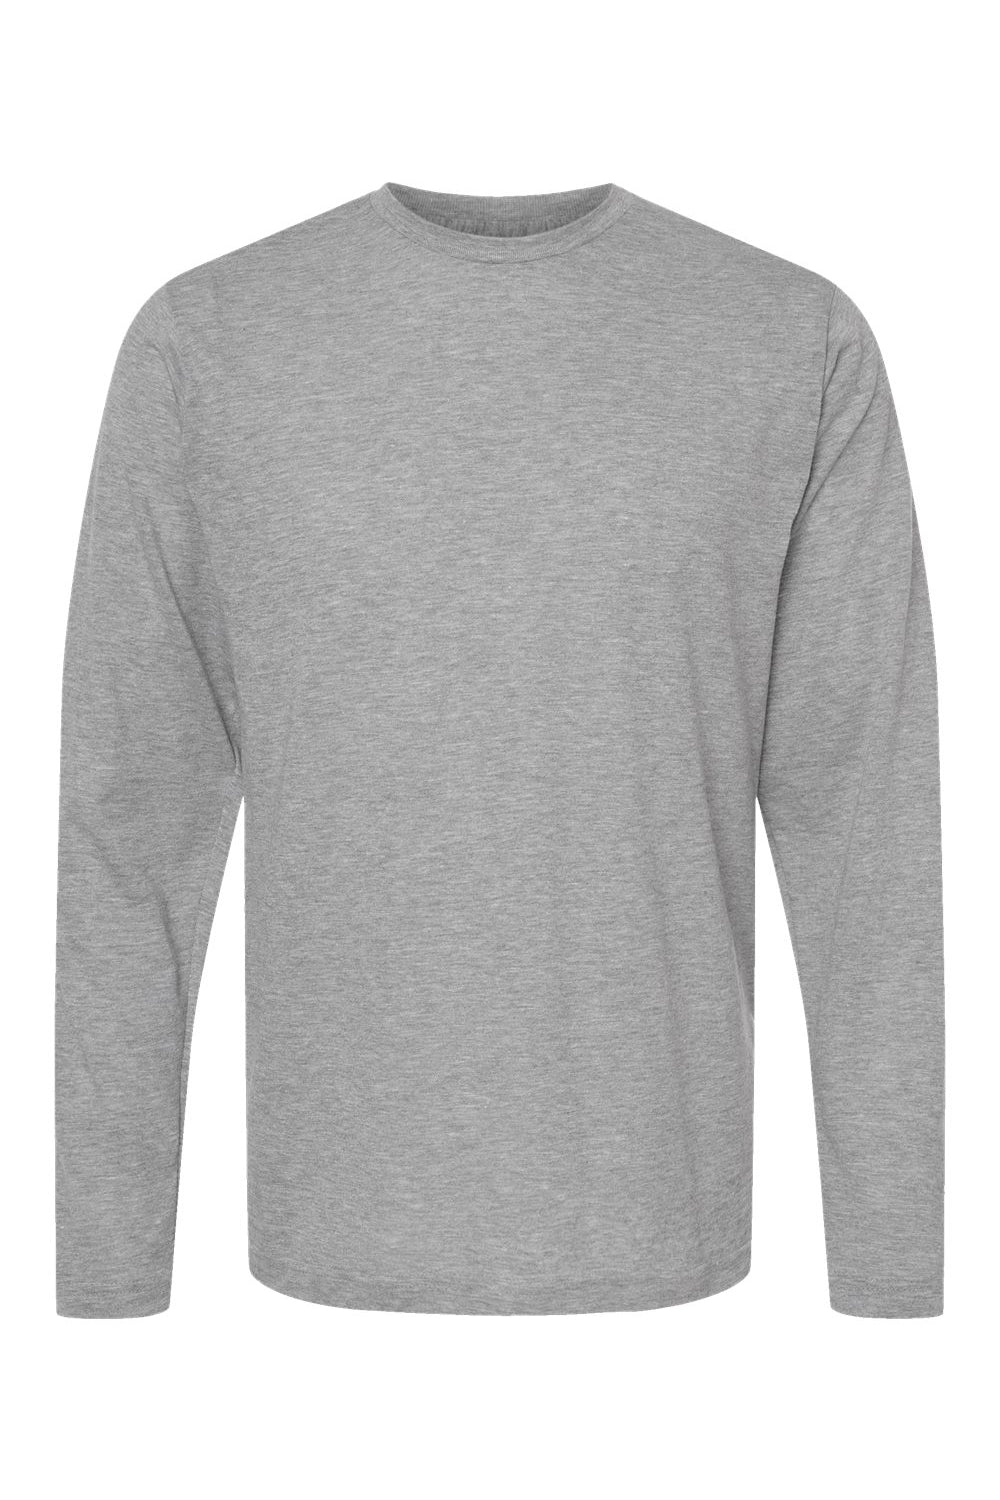 Tultex 242 Mens Poly-Rich Long Sleeve Crewneck T-Shirt Heather Grey Flat Front